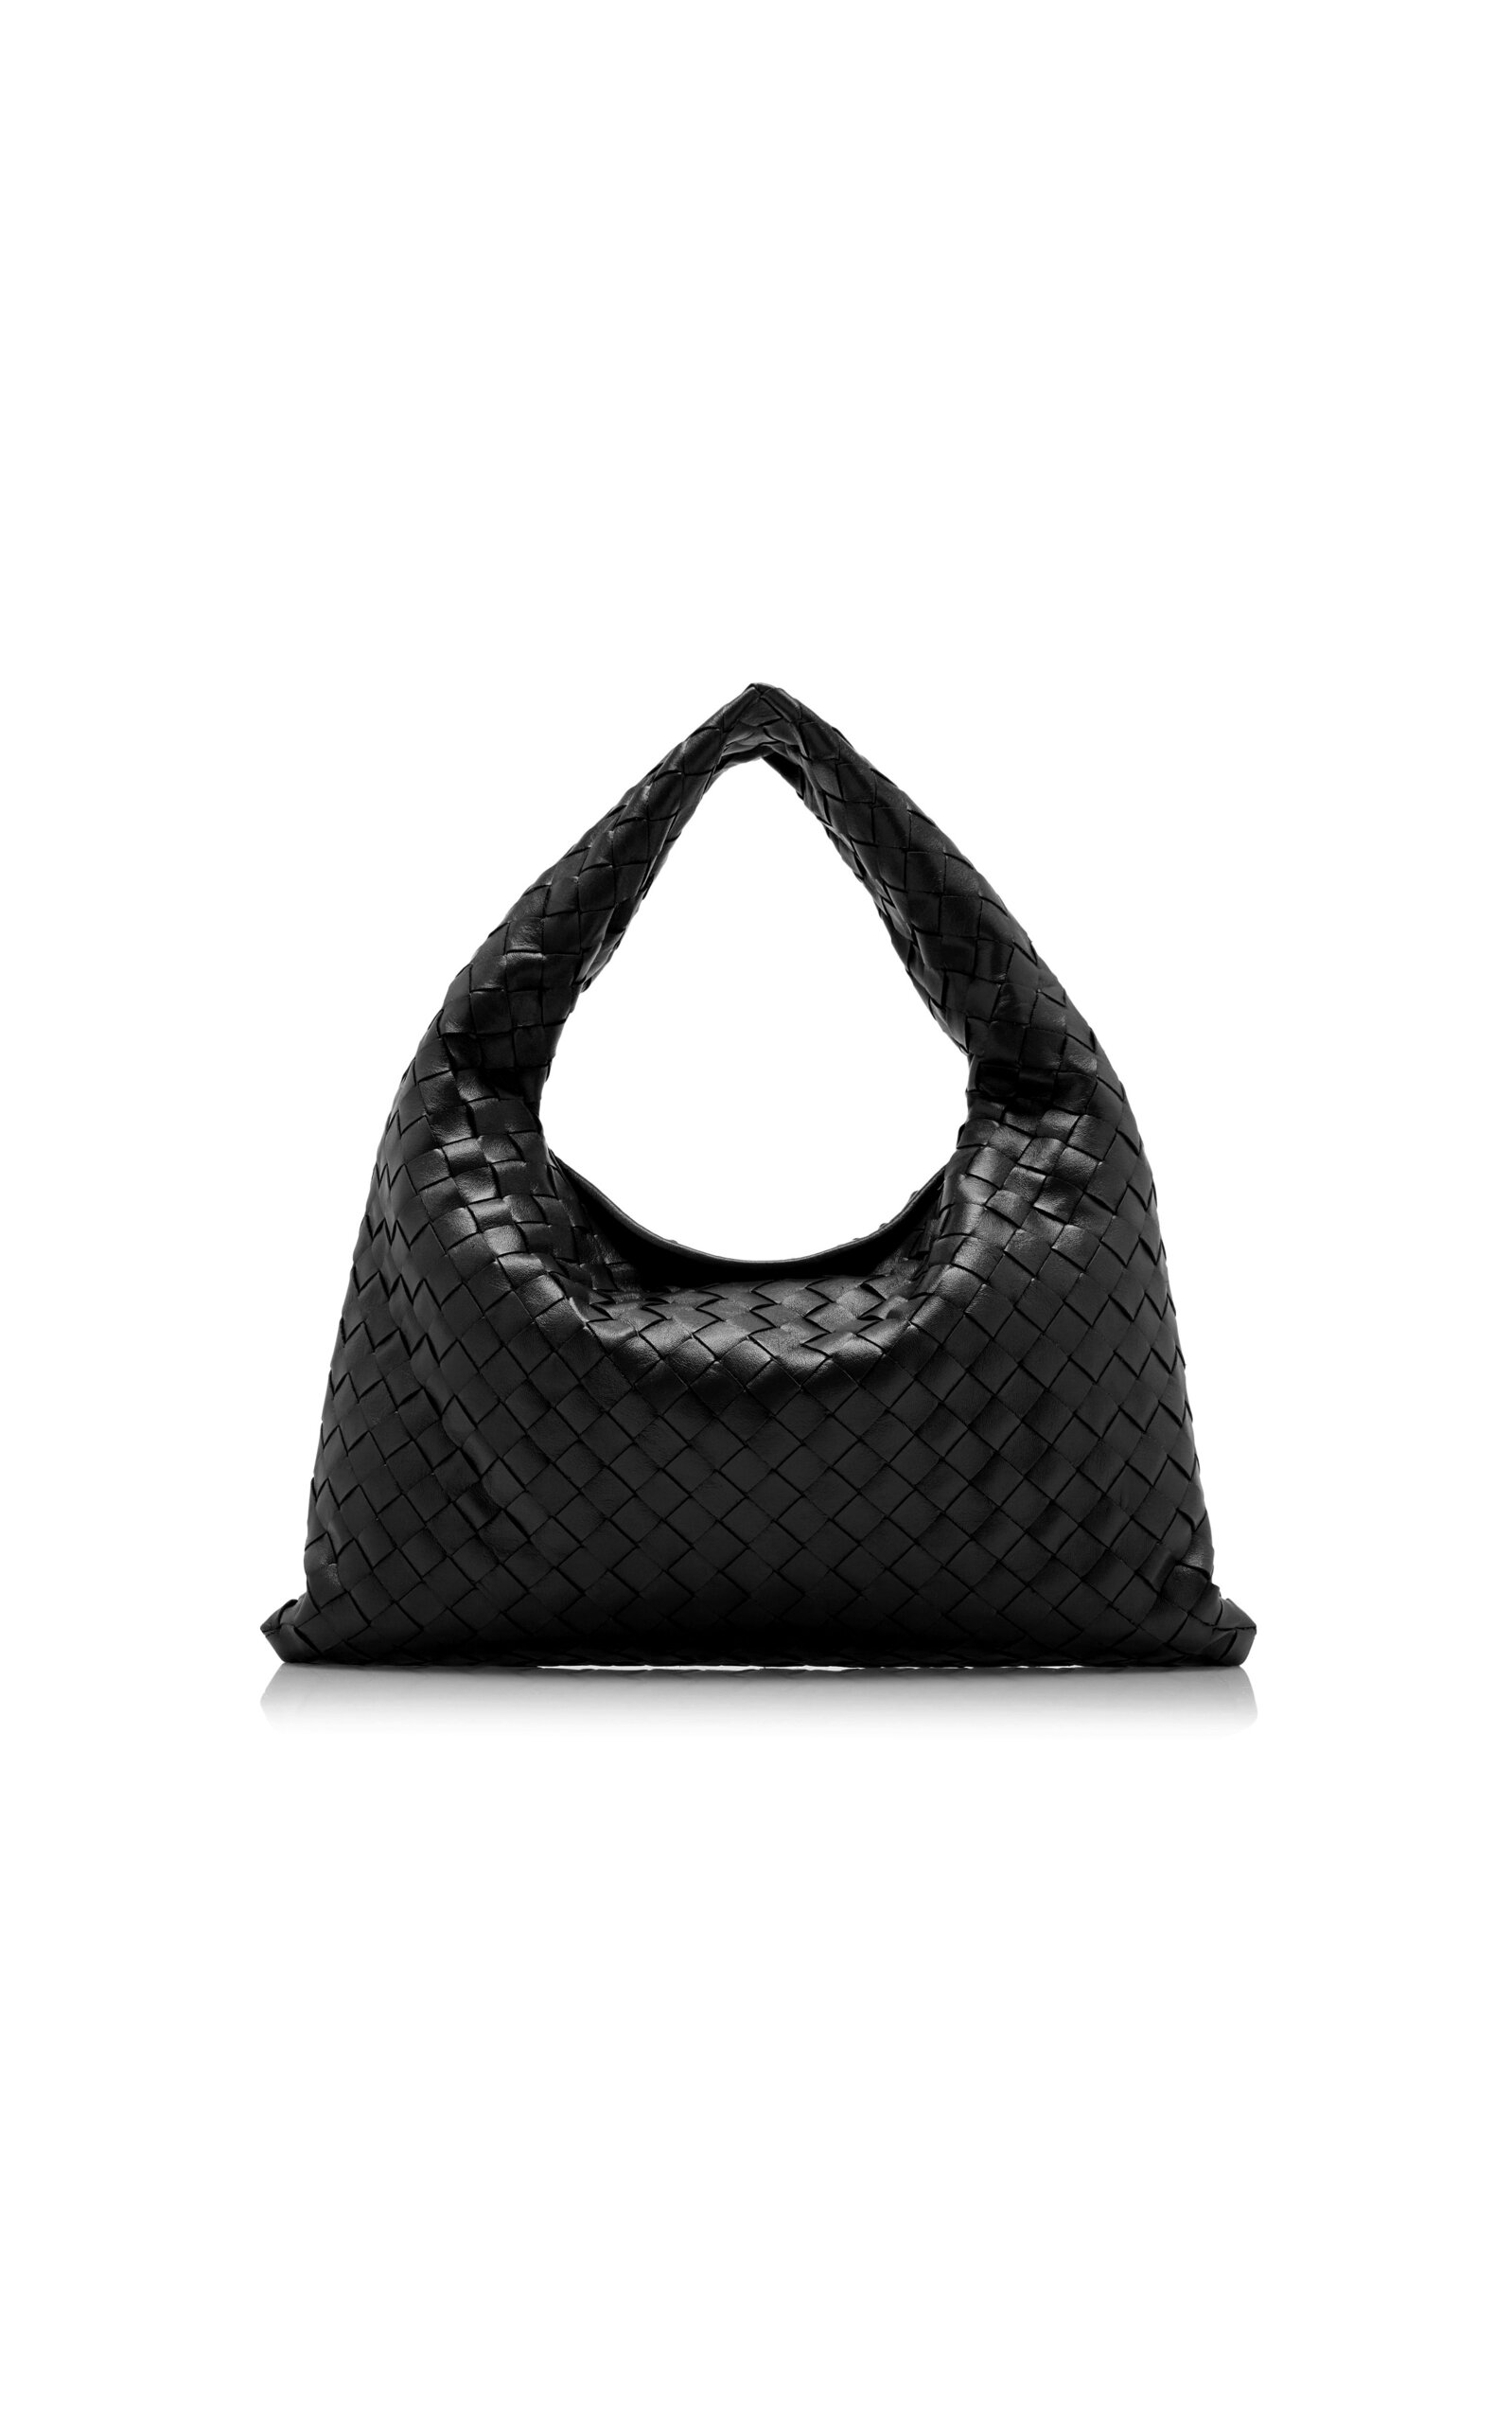 Bottega Veneta - Small Hop Intrecciato Leather Bag - Black - OS - Moda Operandi